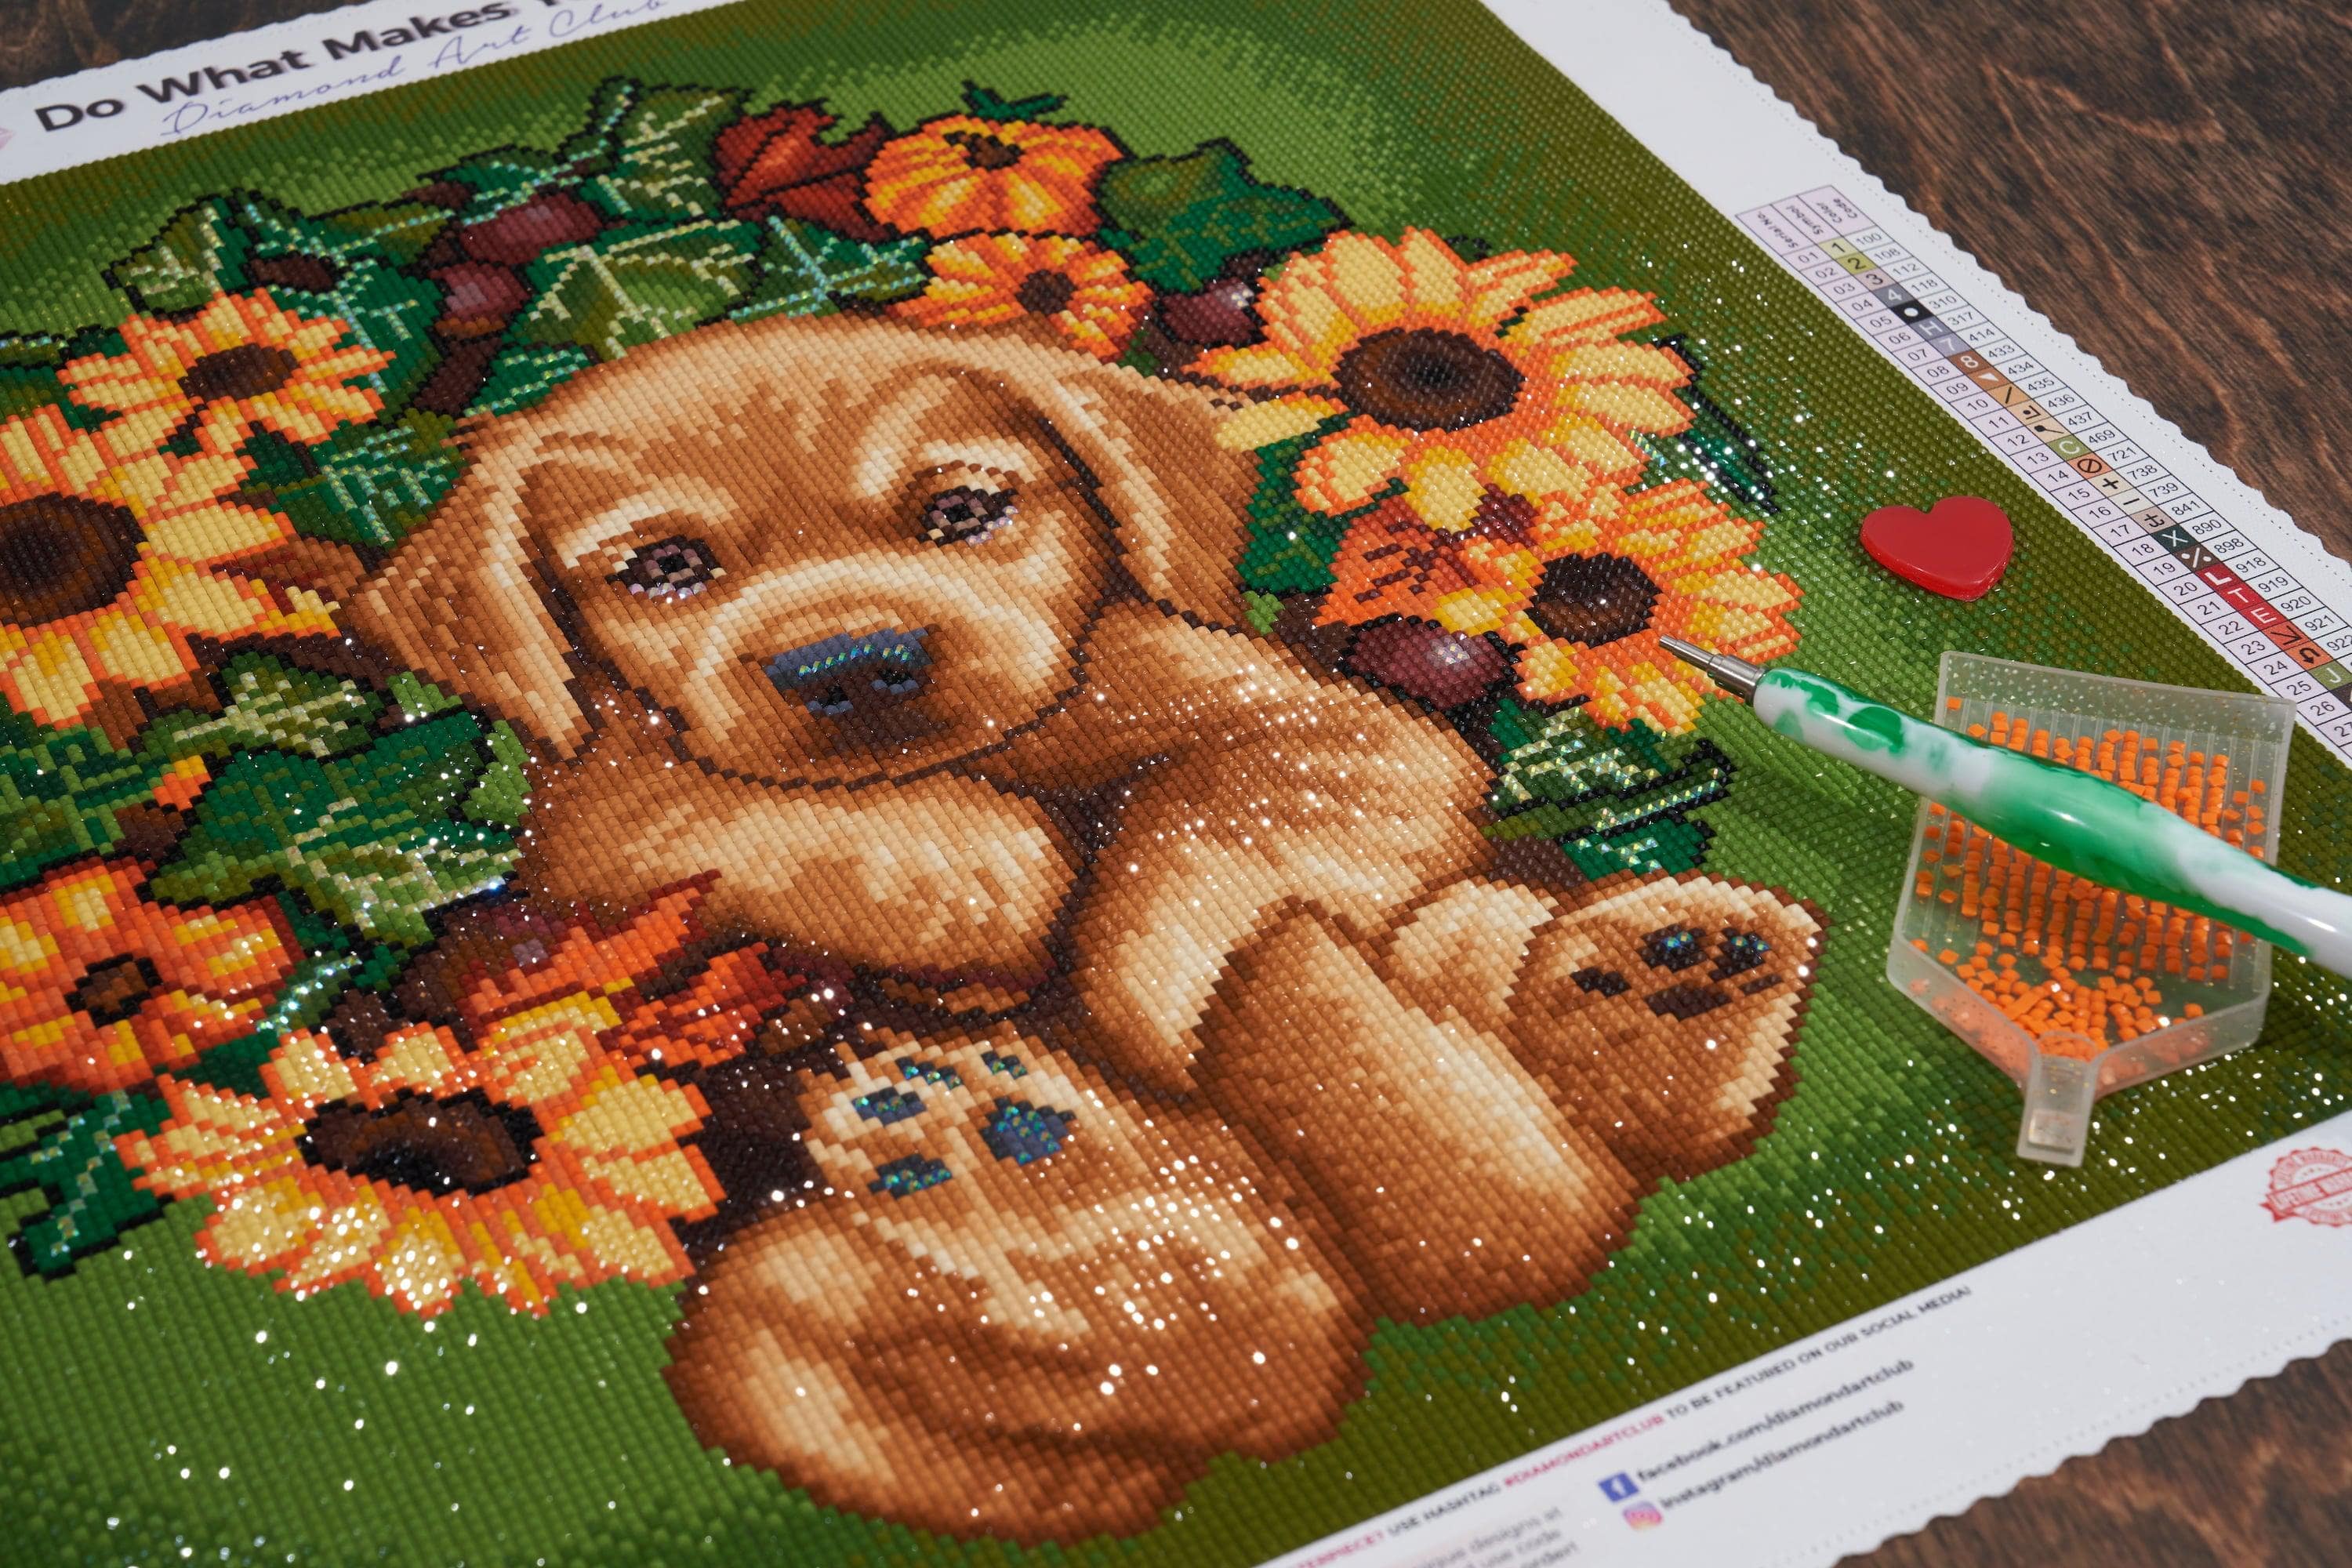 Golden Retriever Dog Diamond Painting Cute Pet Design Embroidery Wall  Decoration